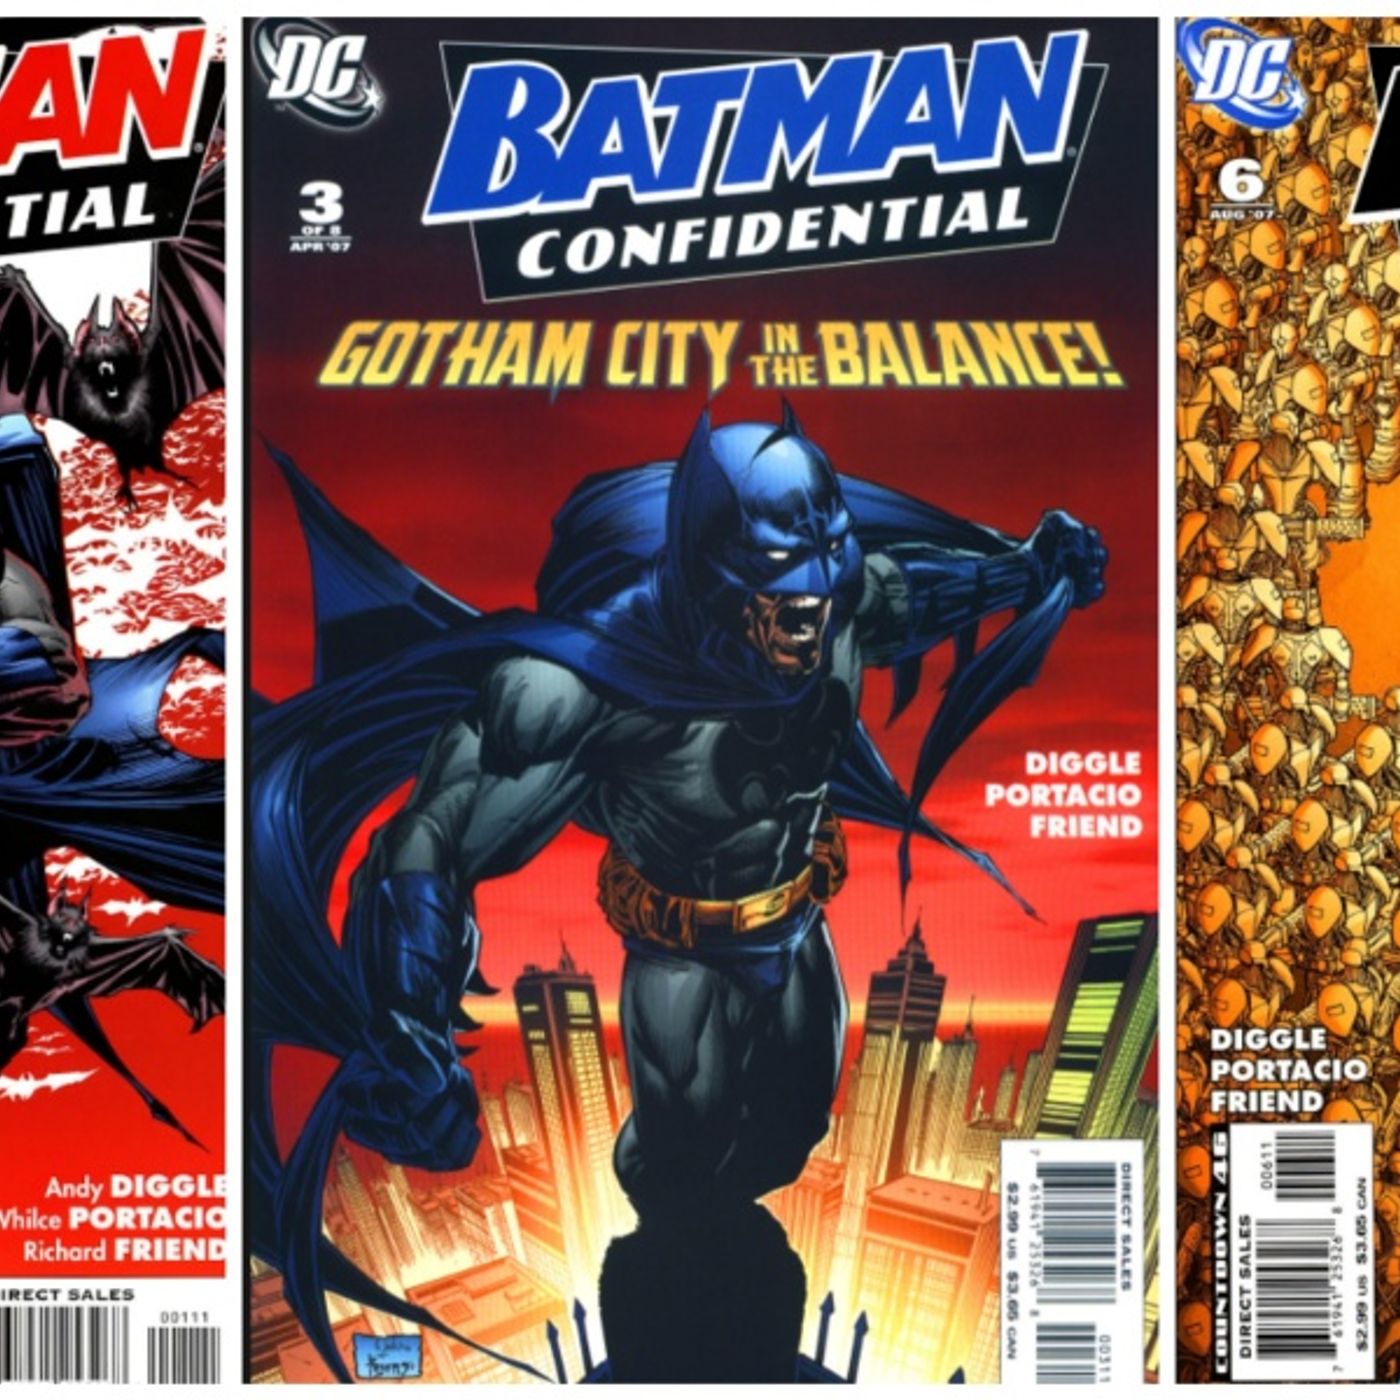 Source Material #346 - Batman Confidential 